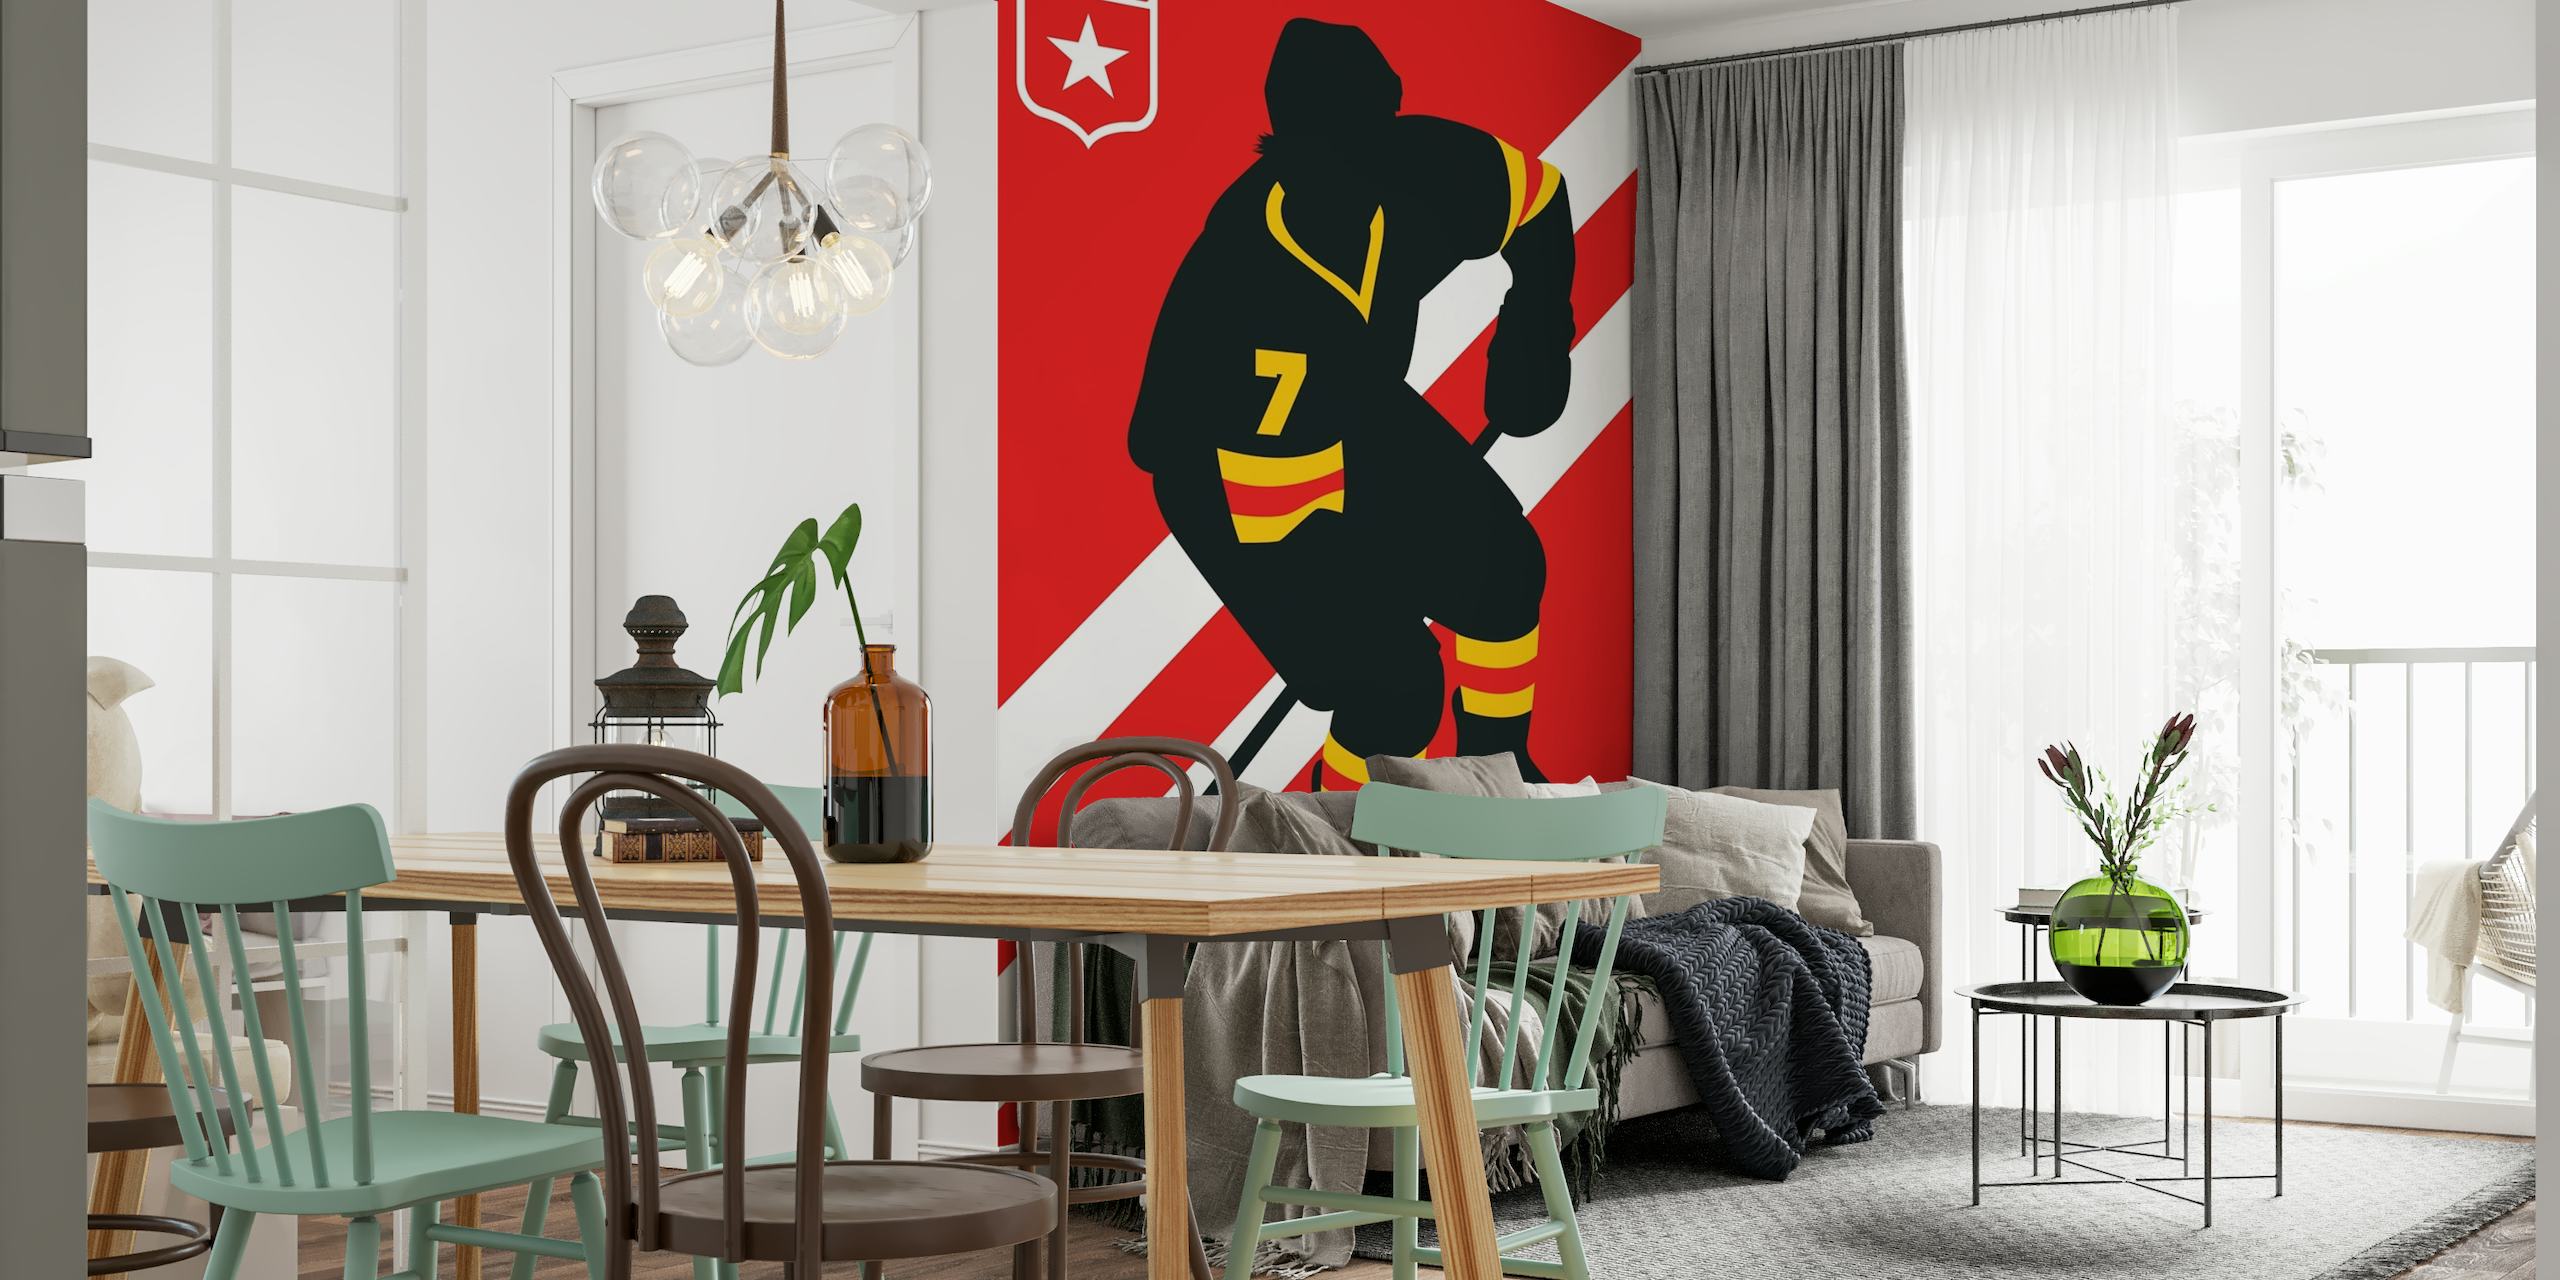 Ice Hockey Player wallpaper